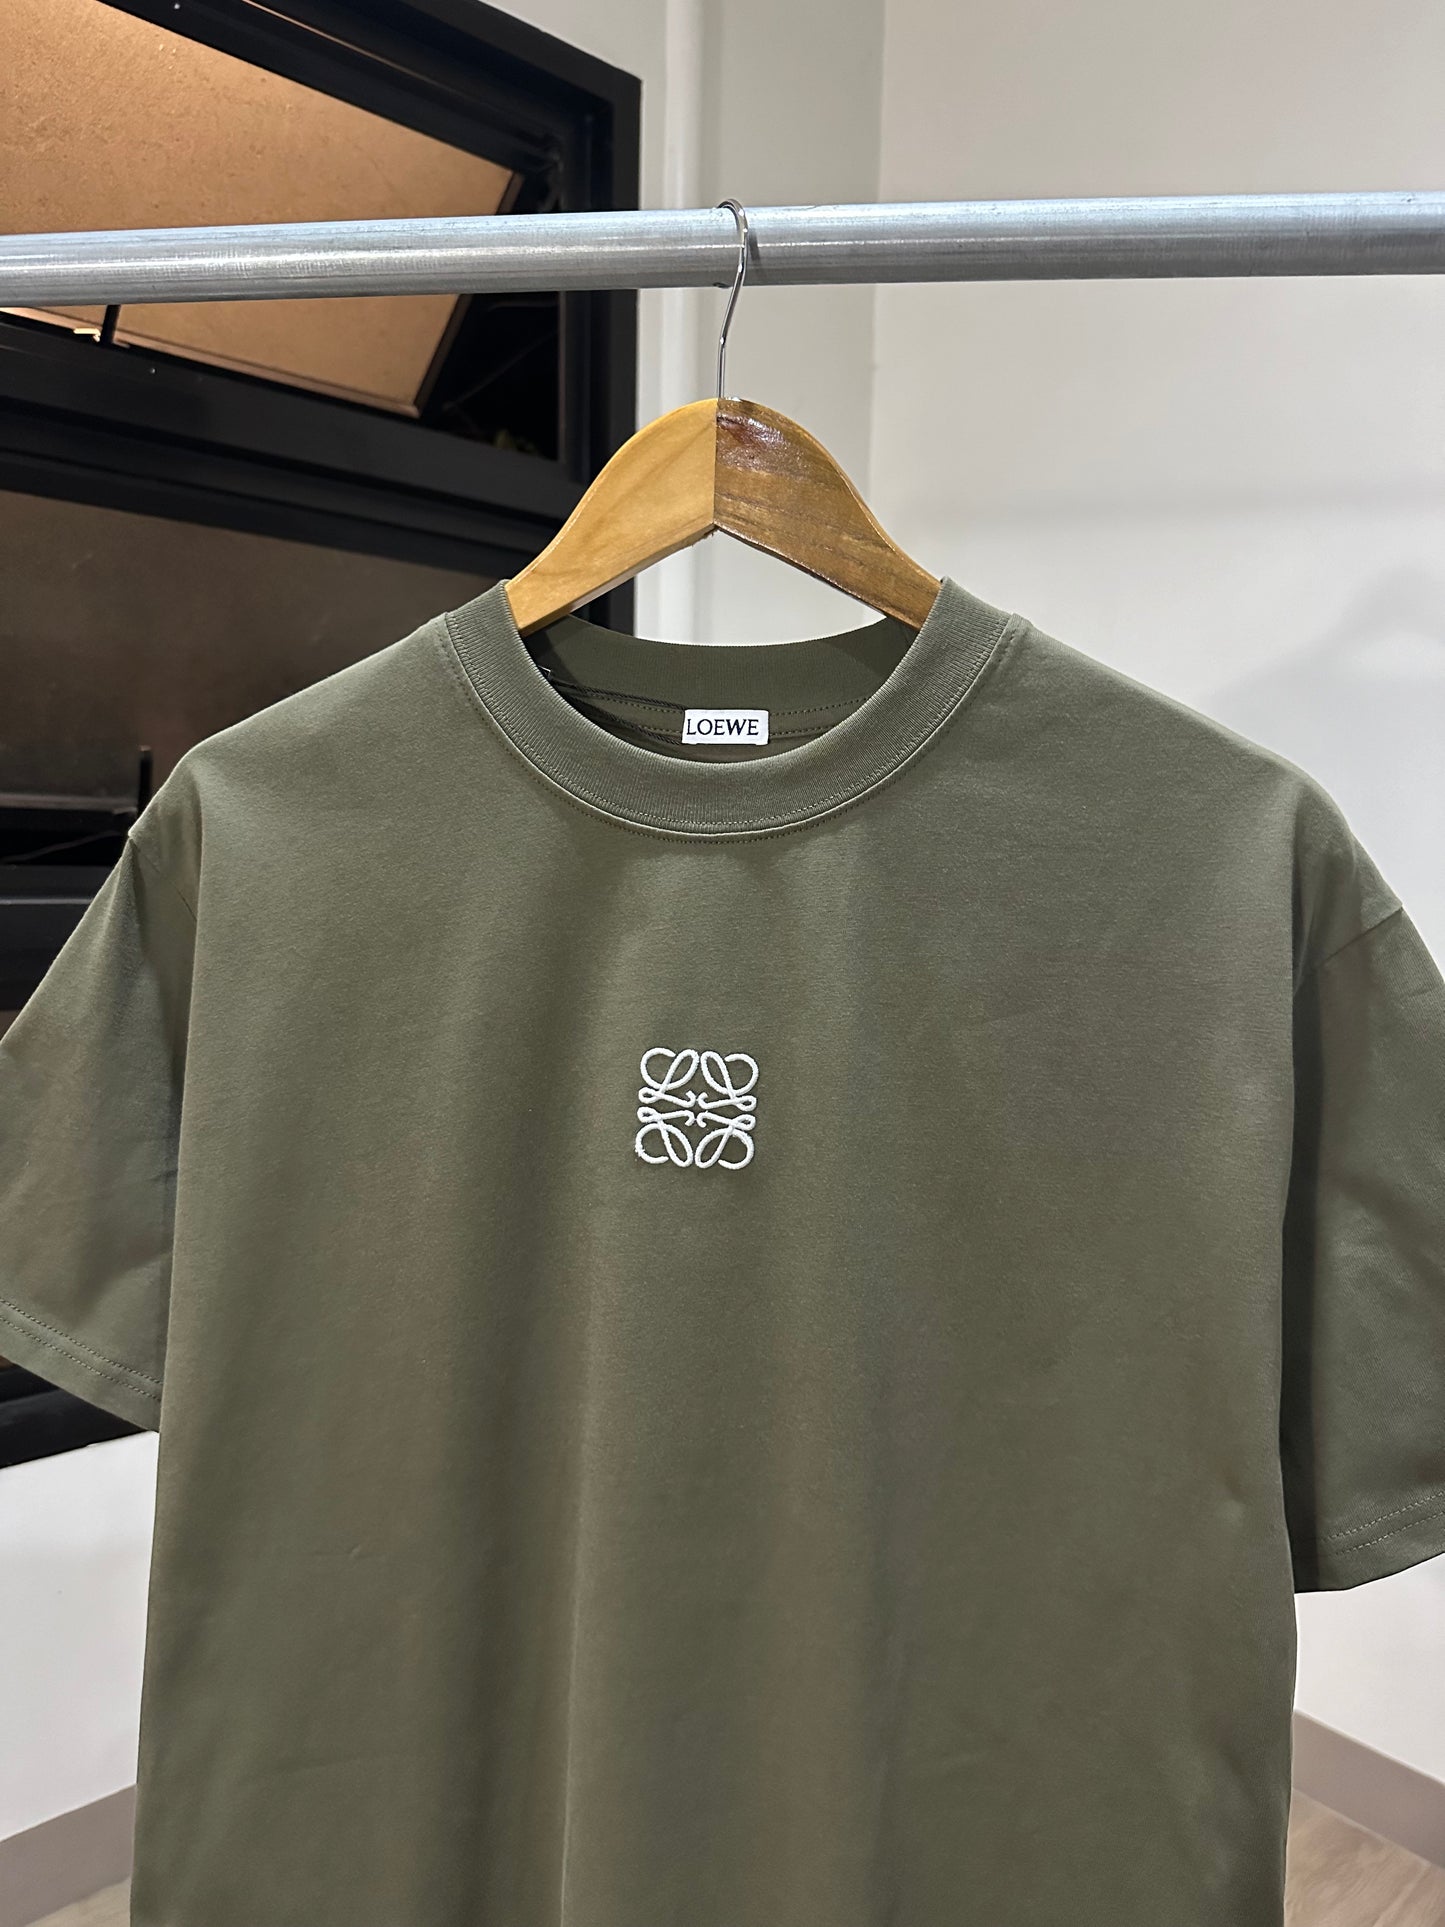 Loewe Anagram T-Shirt (Army Green)